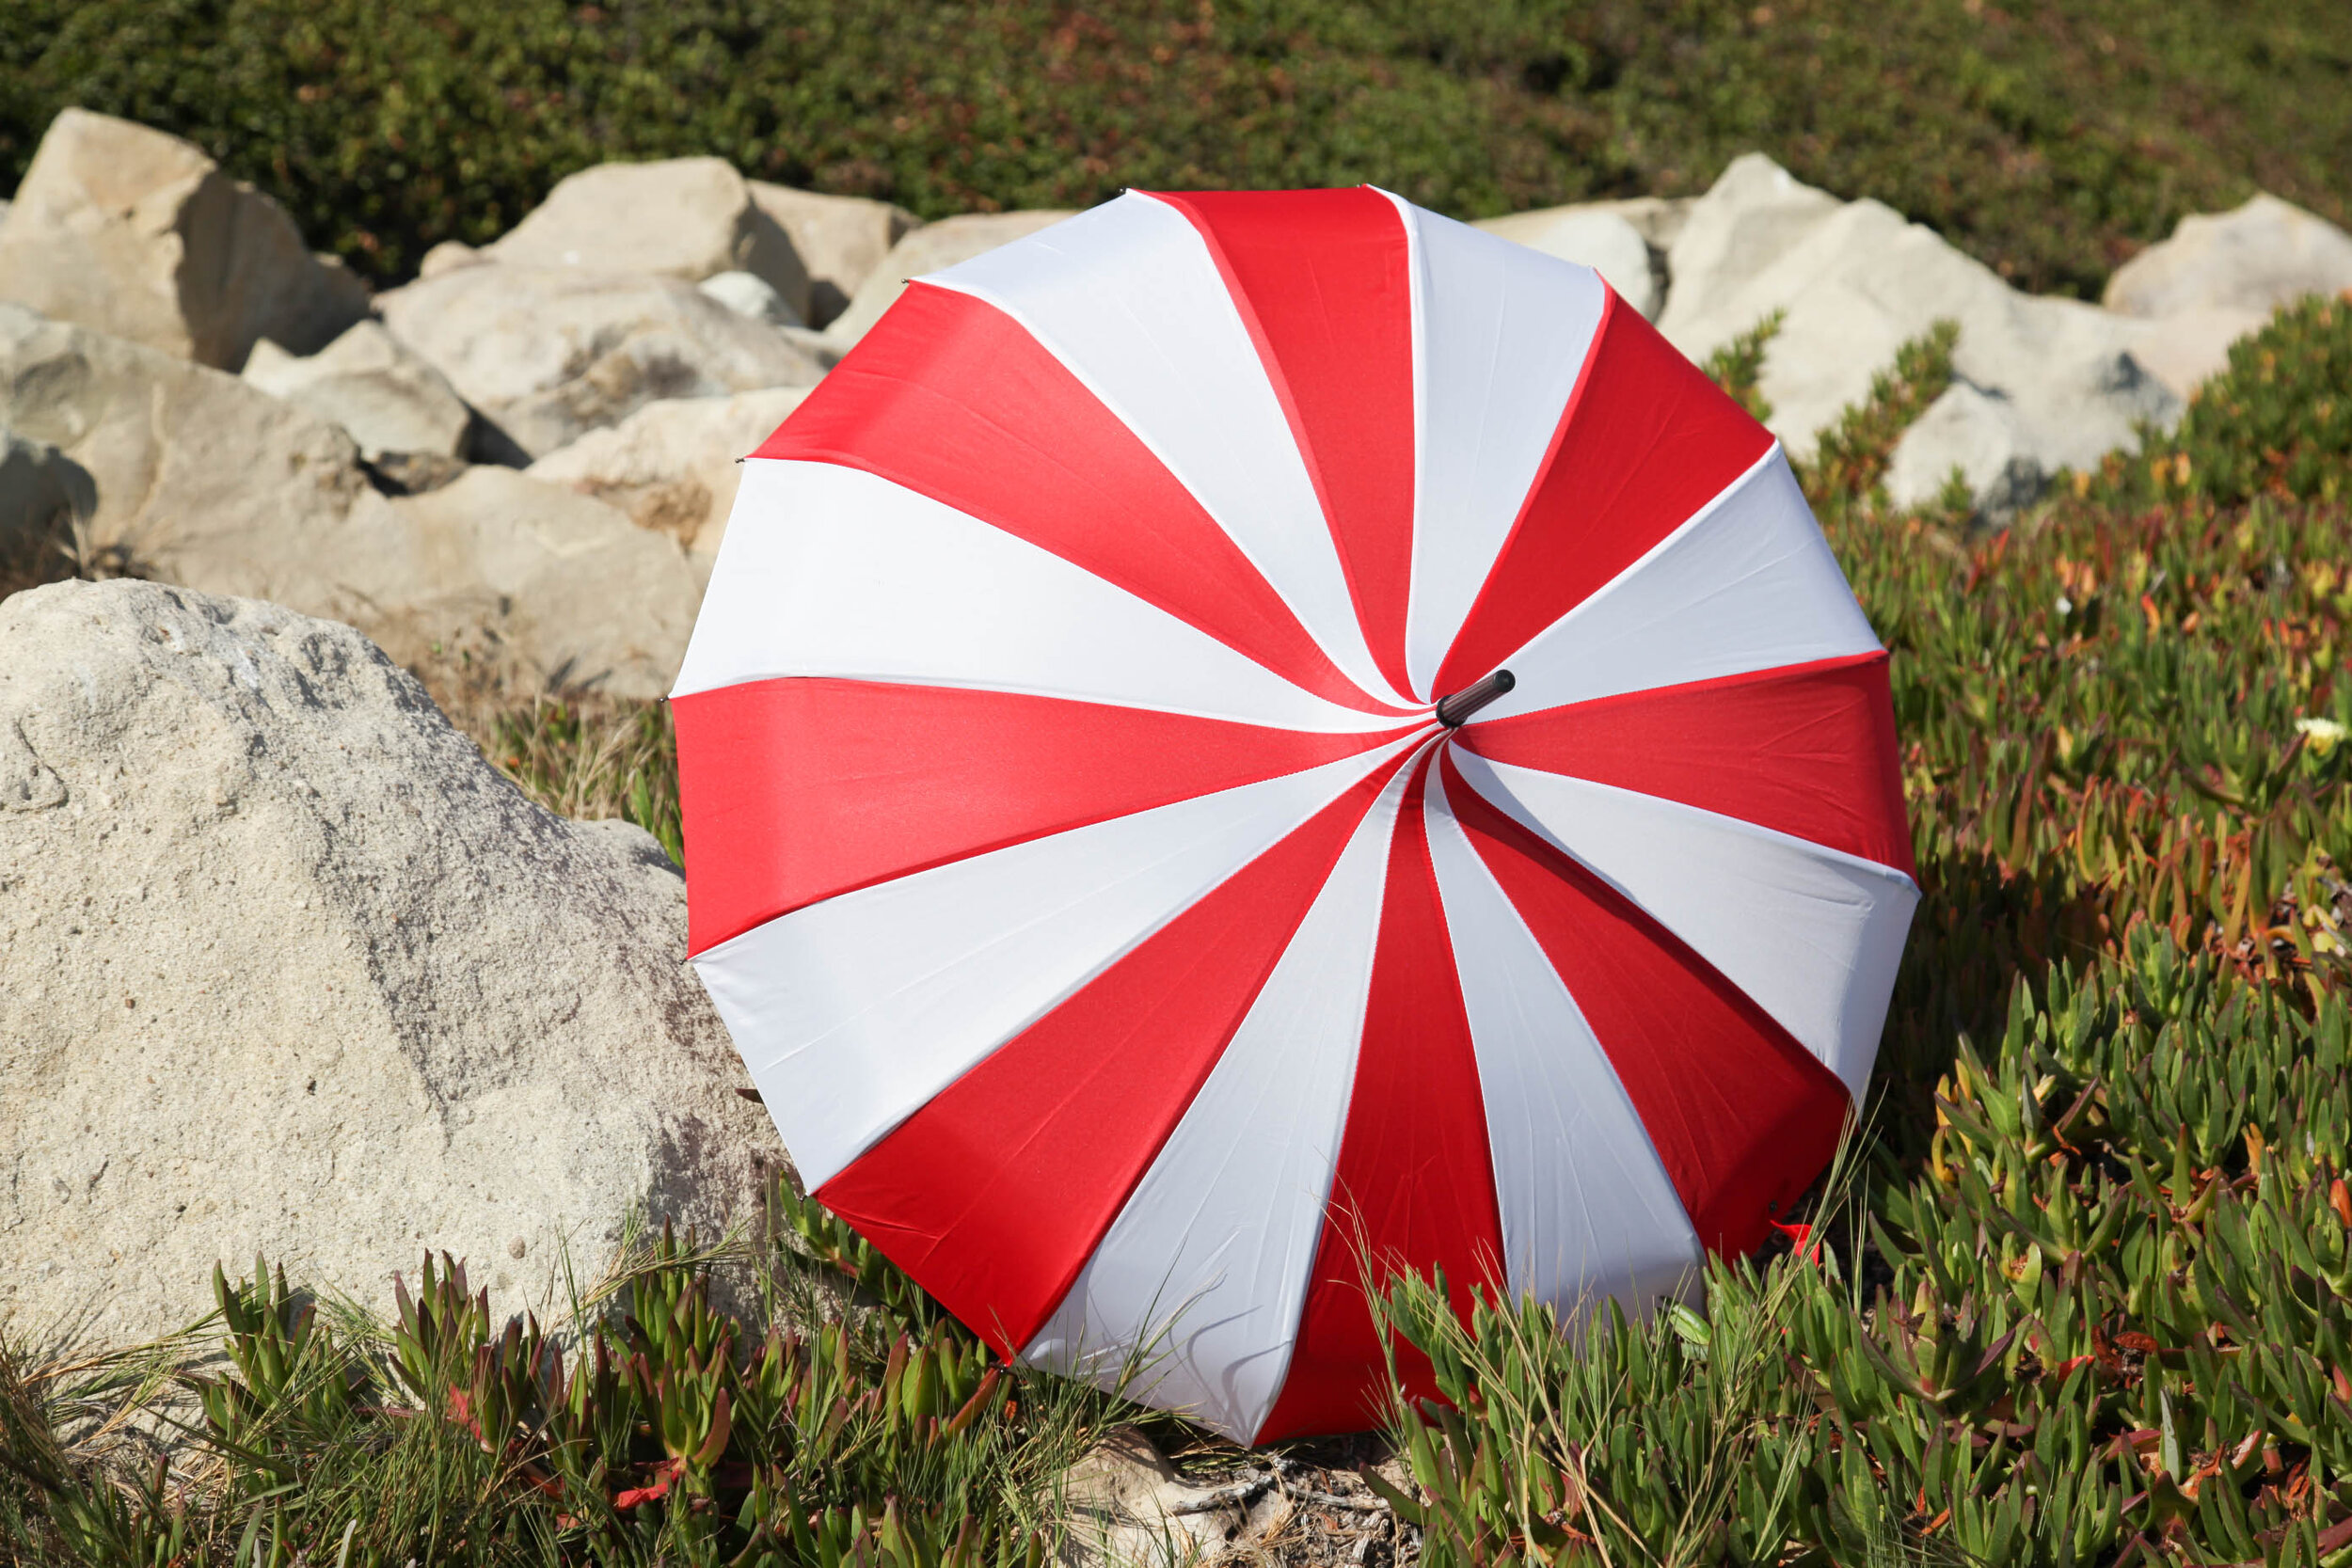 Kung Fu Smith Vintage Pagoda Parasol Umbrella Sun UV Protection Rain Stick Umbrellas for Women & Girls Black and Red 